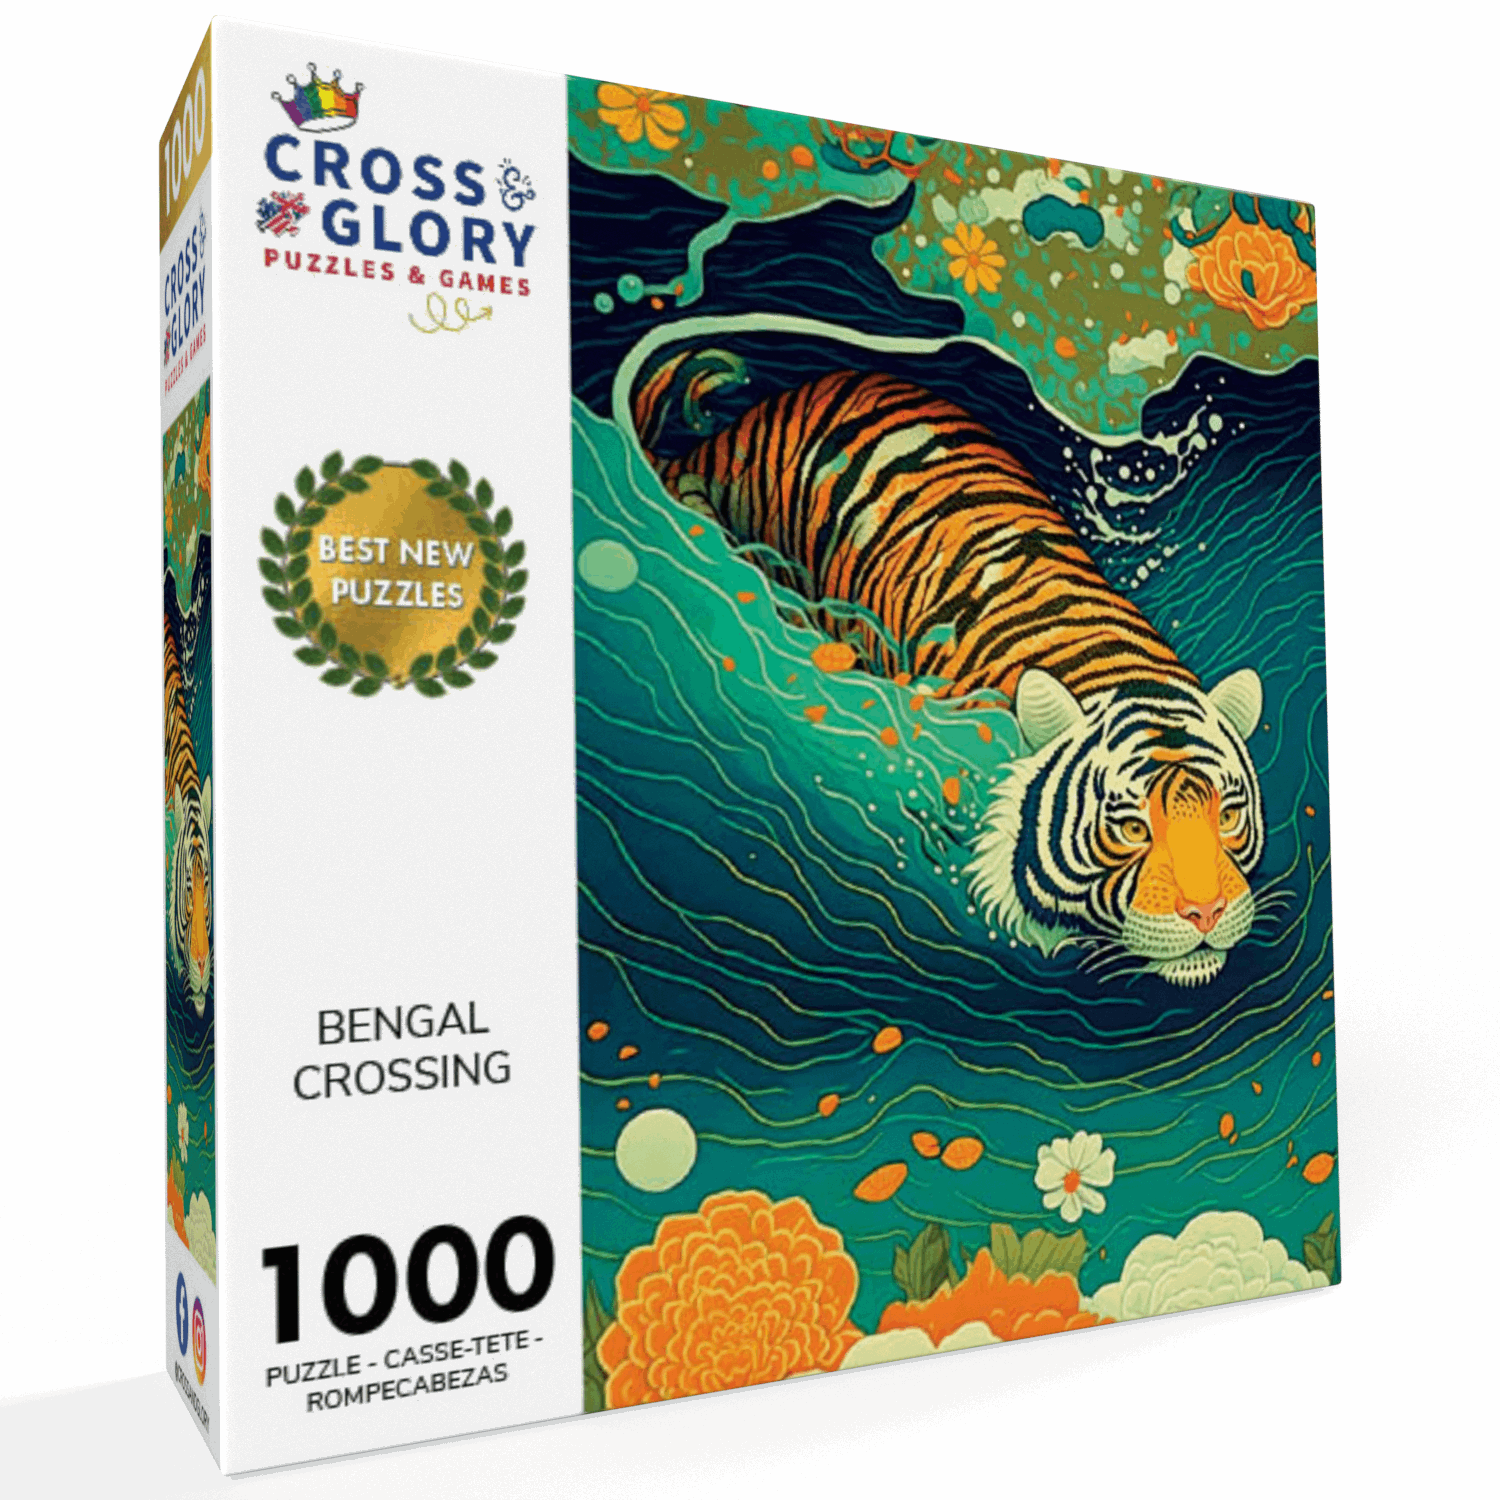 Bengal Crossing - 1000 Piece Jigsaw Puzzle | Cross & Glory